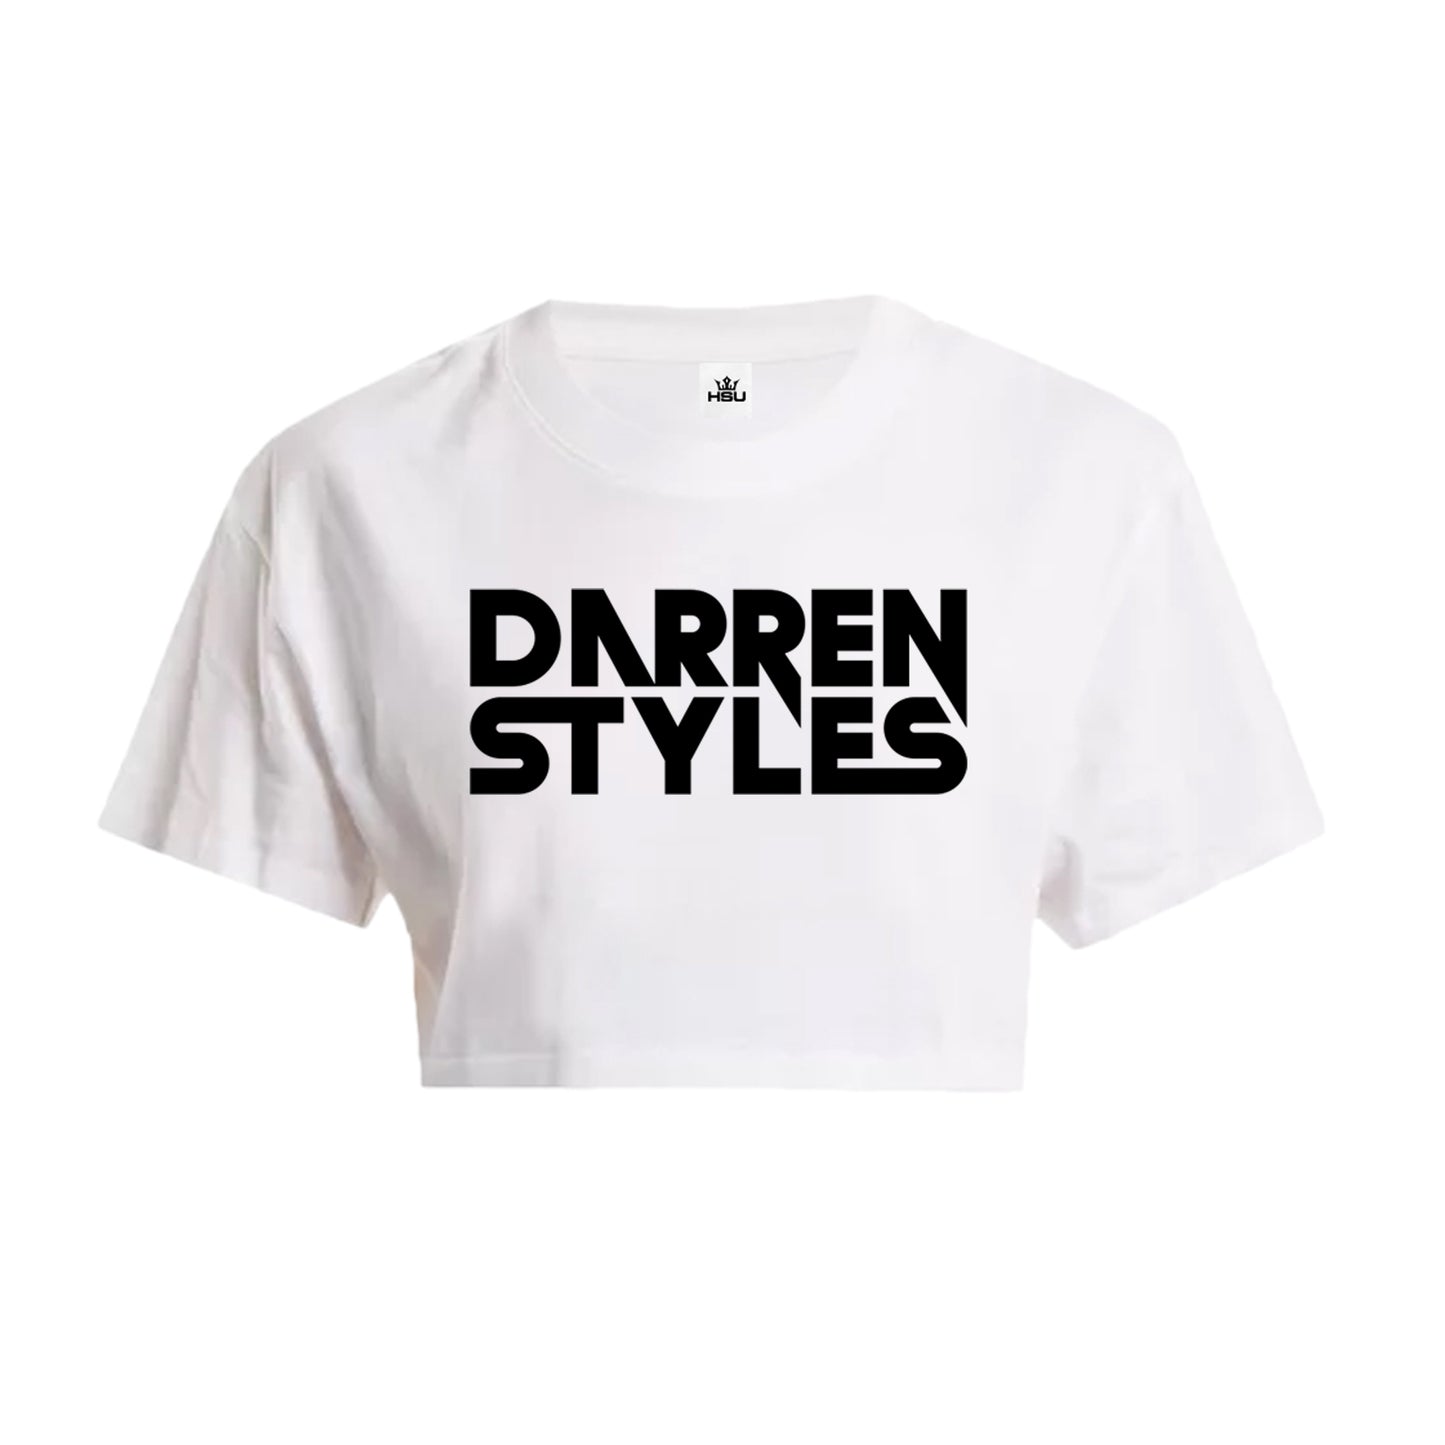 Darren Styles Crop Top x Logo Print White